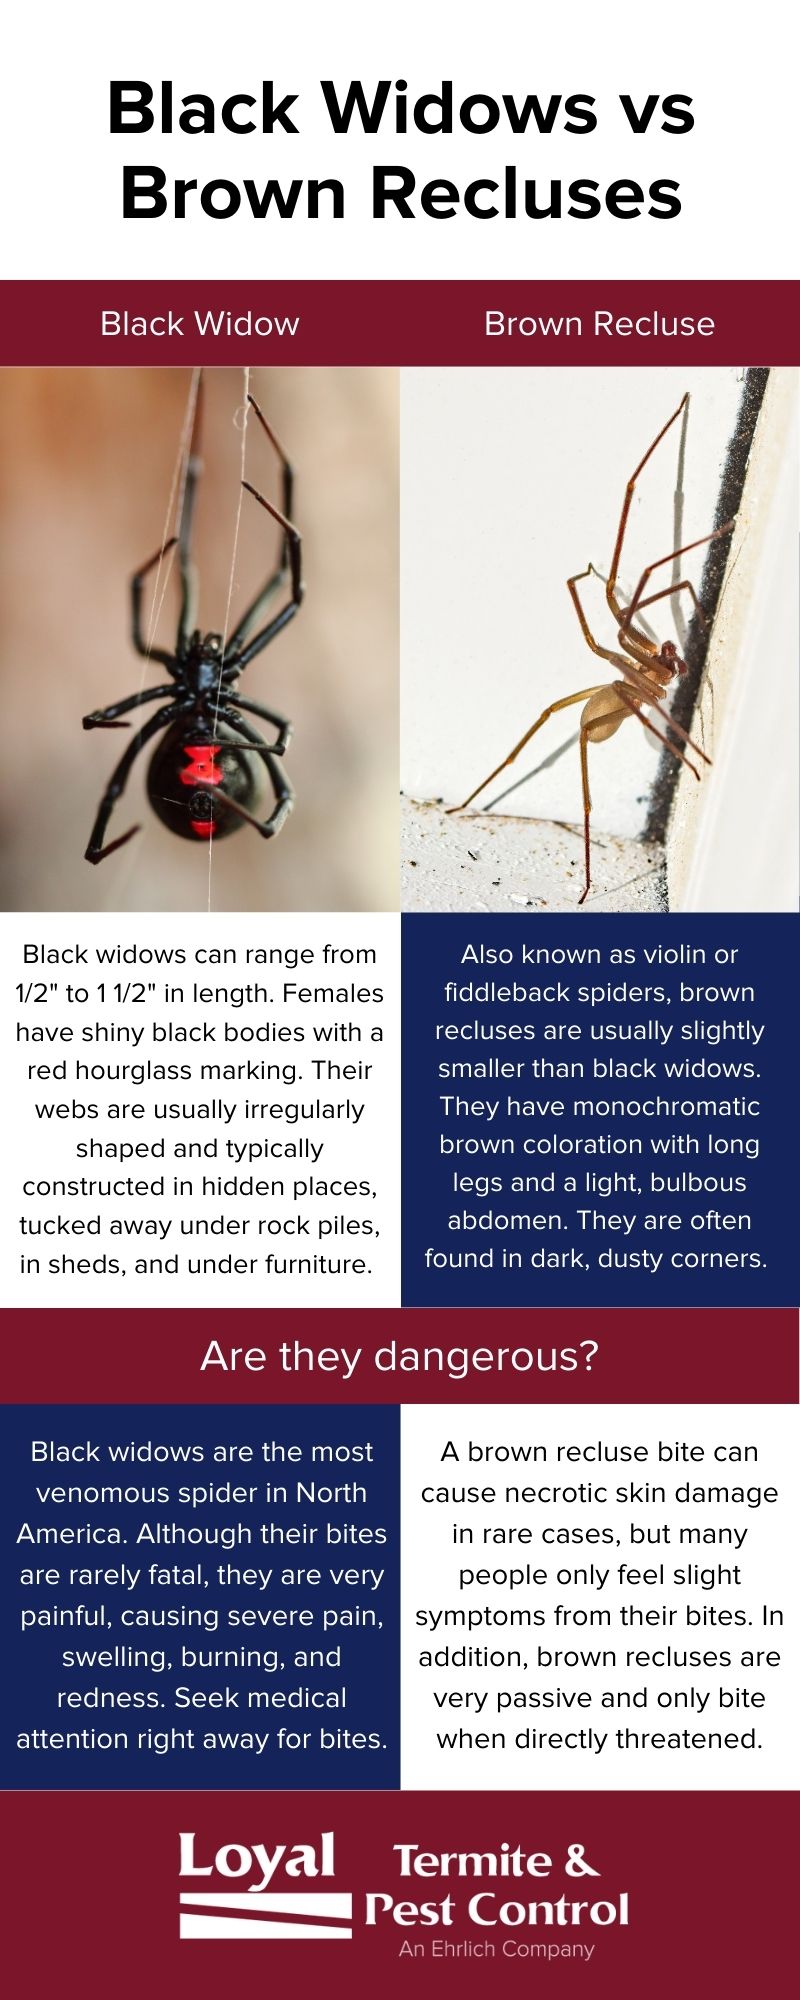 brown recluse vs black widow